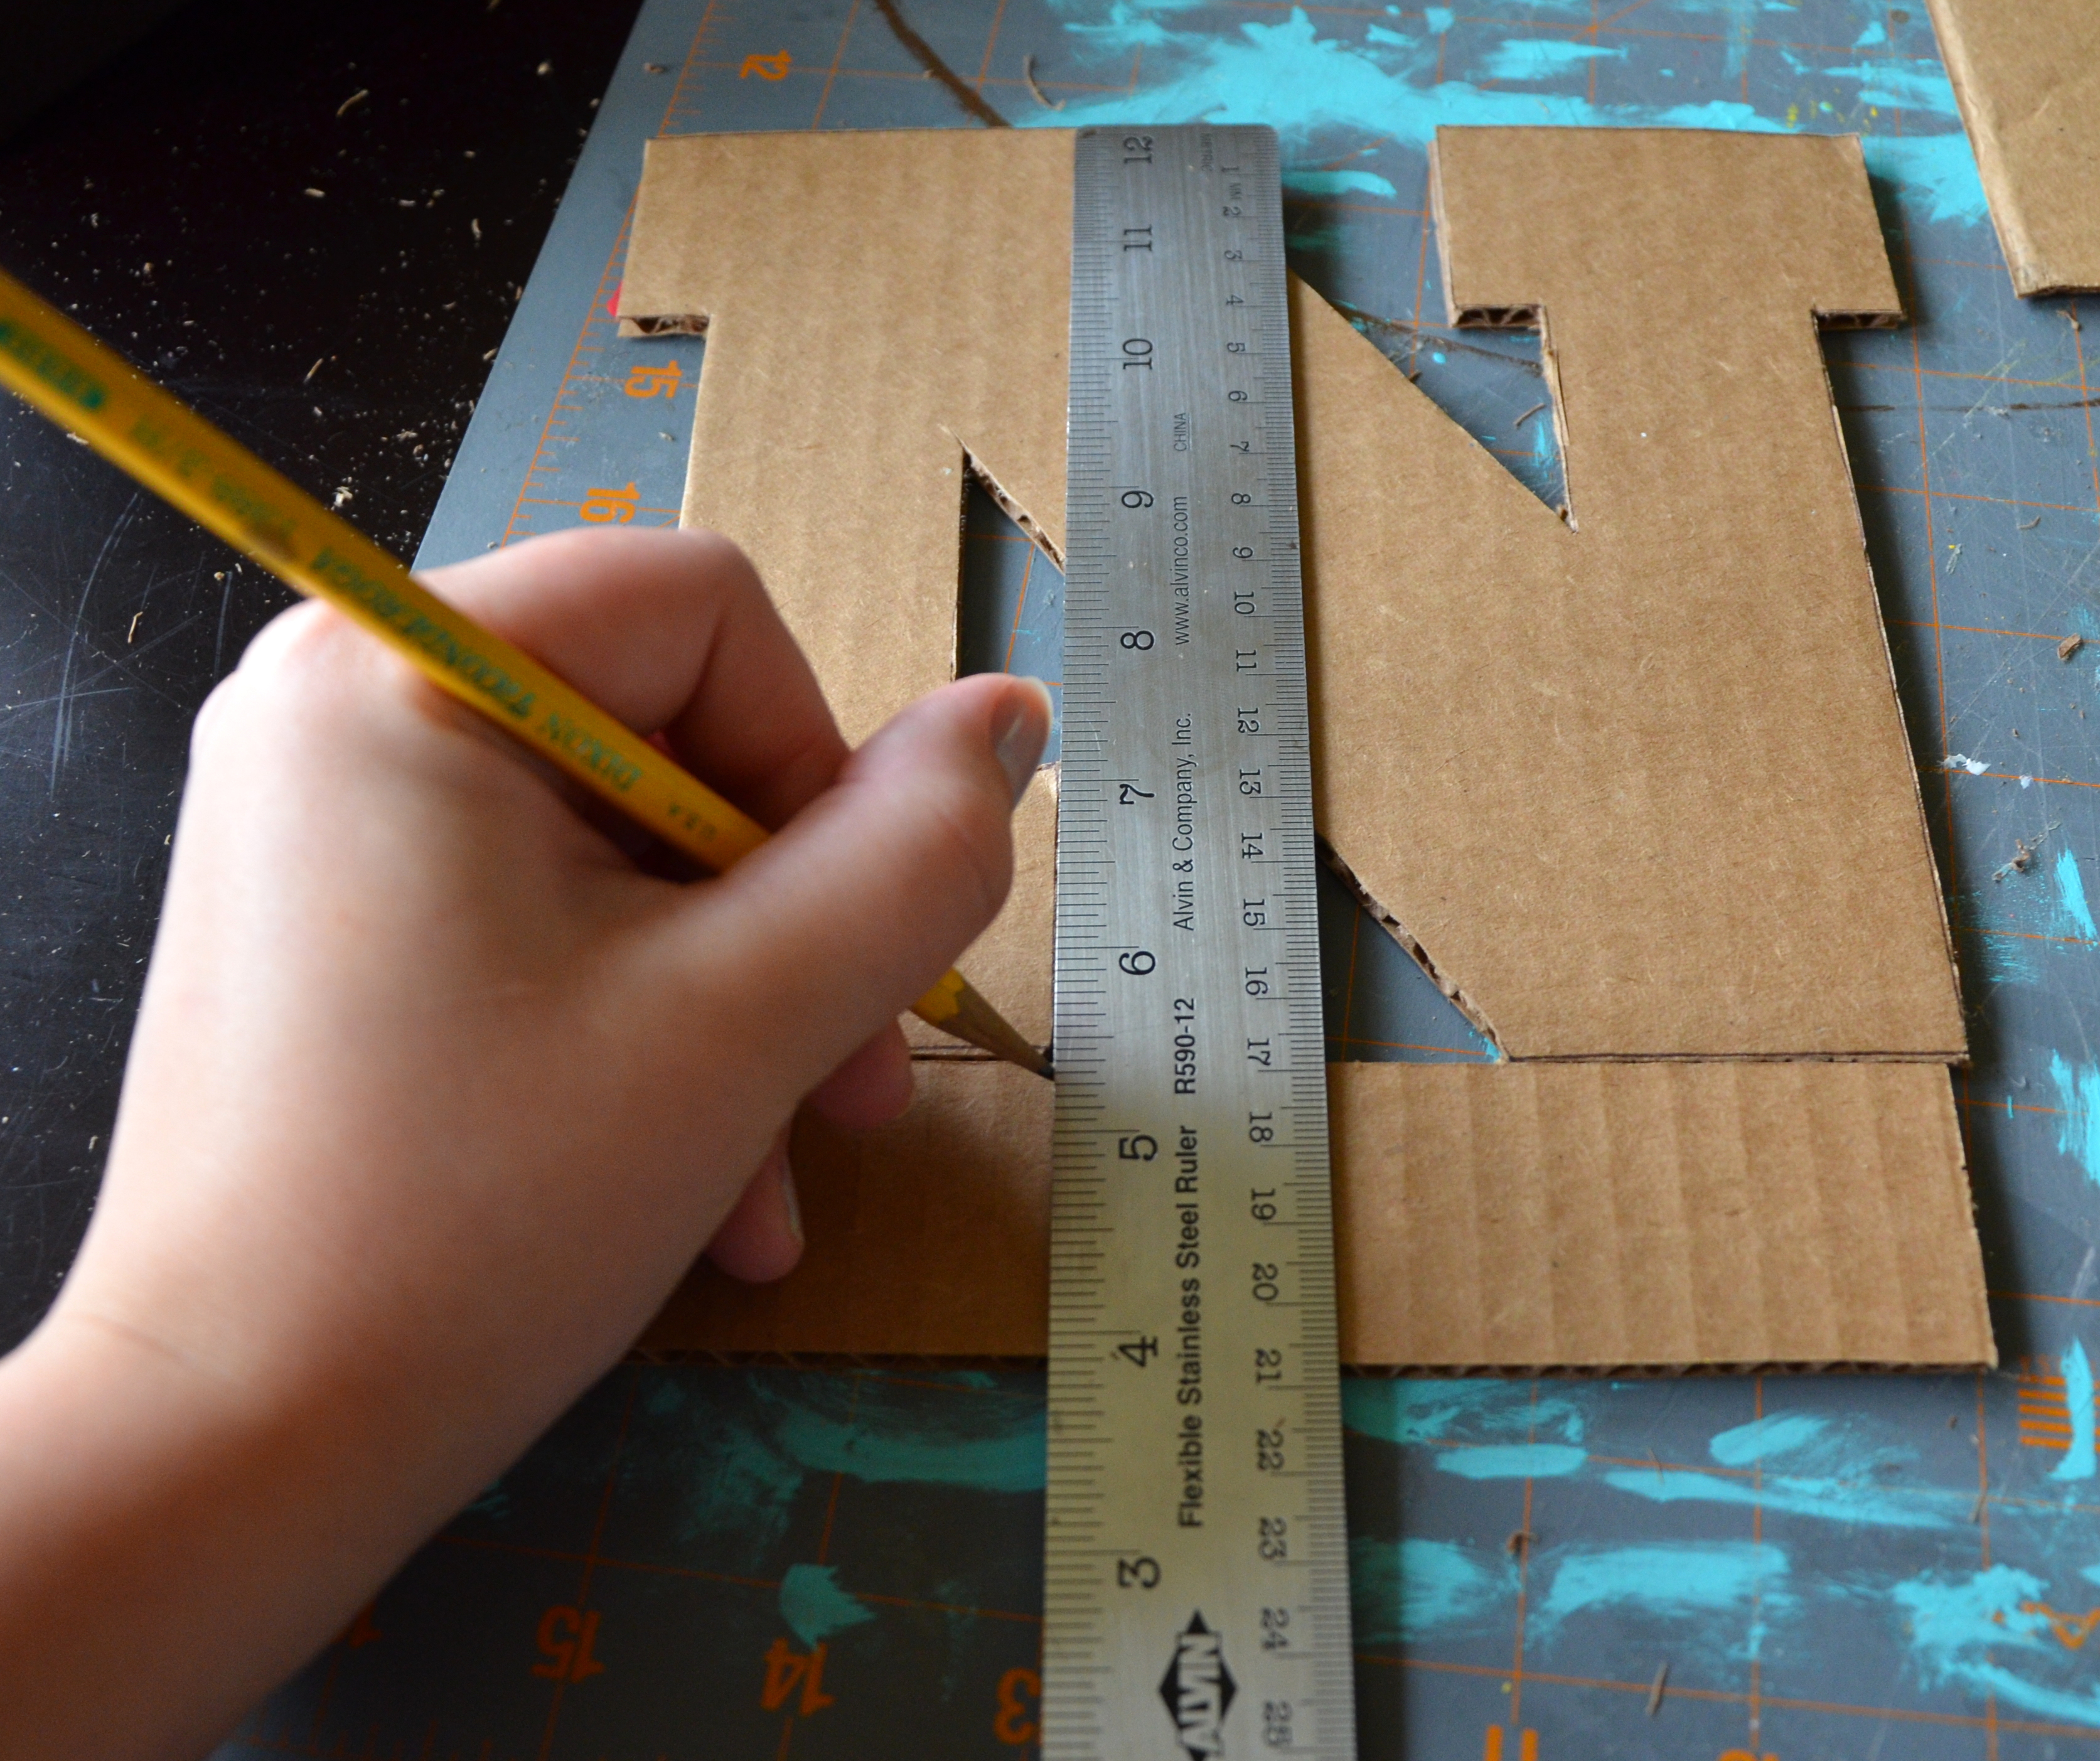 DIY Cardboard Letter Design Tutorial